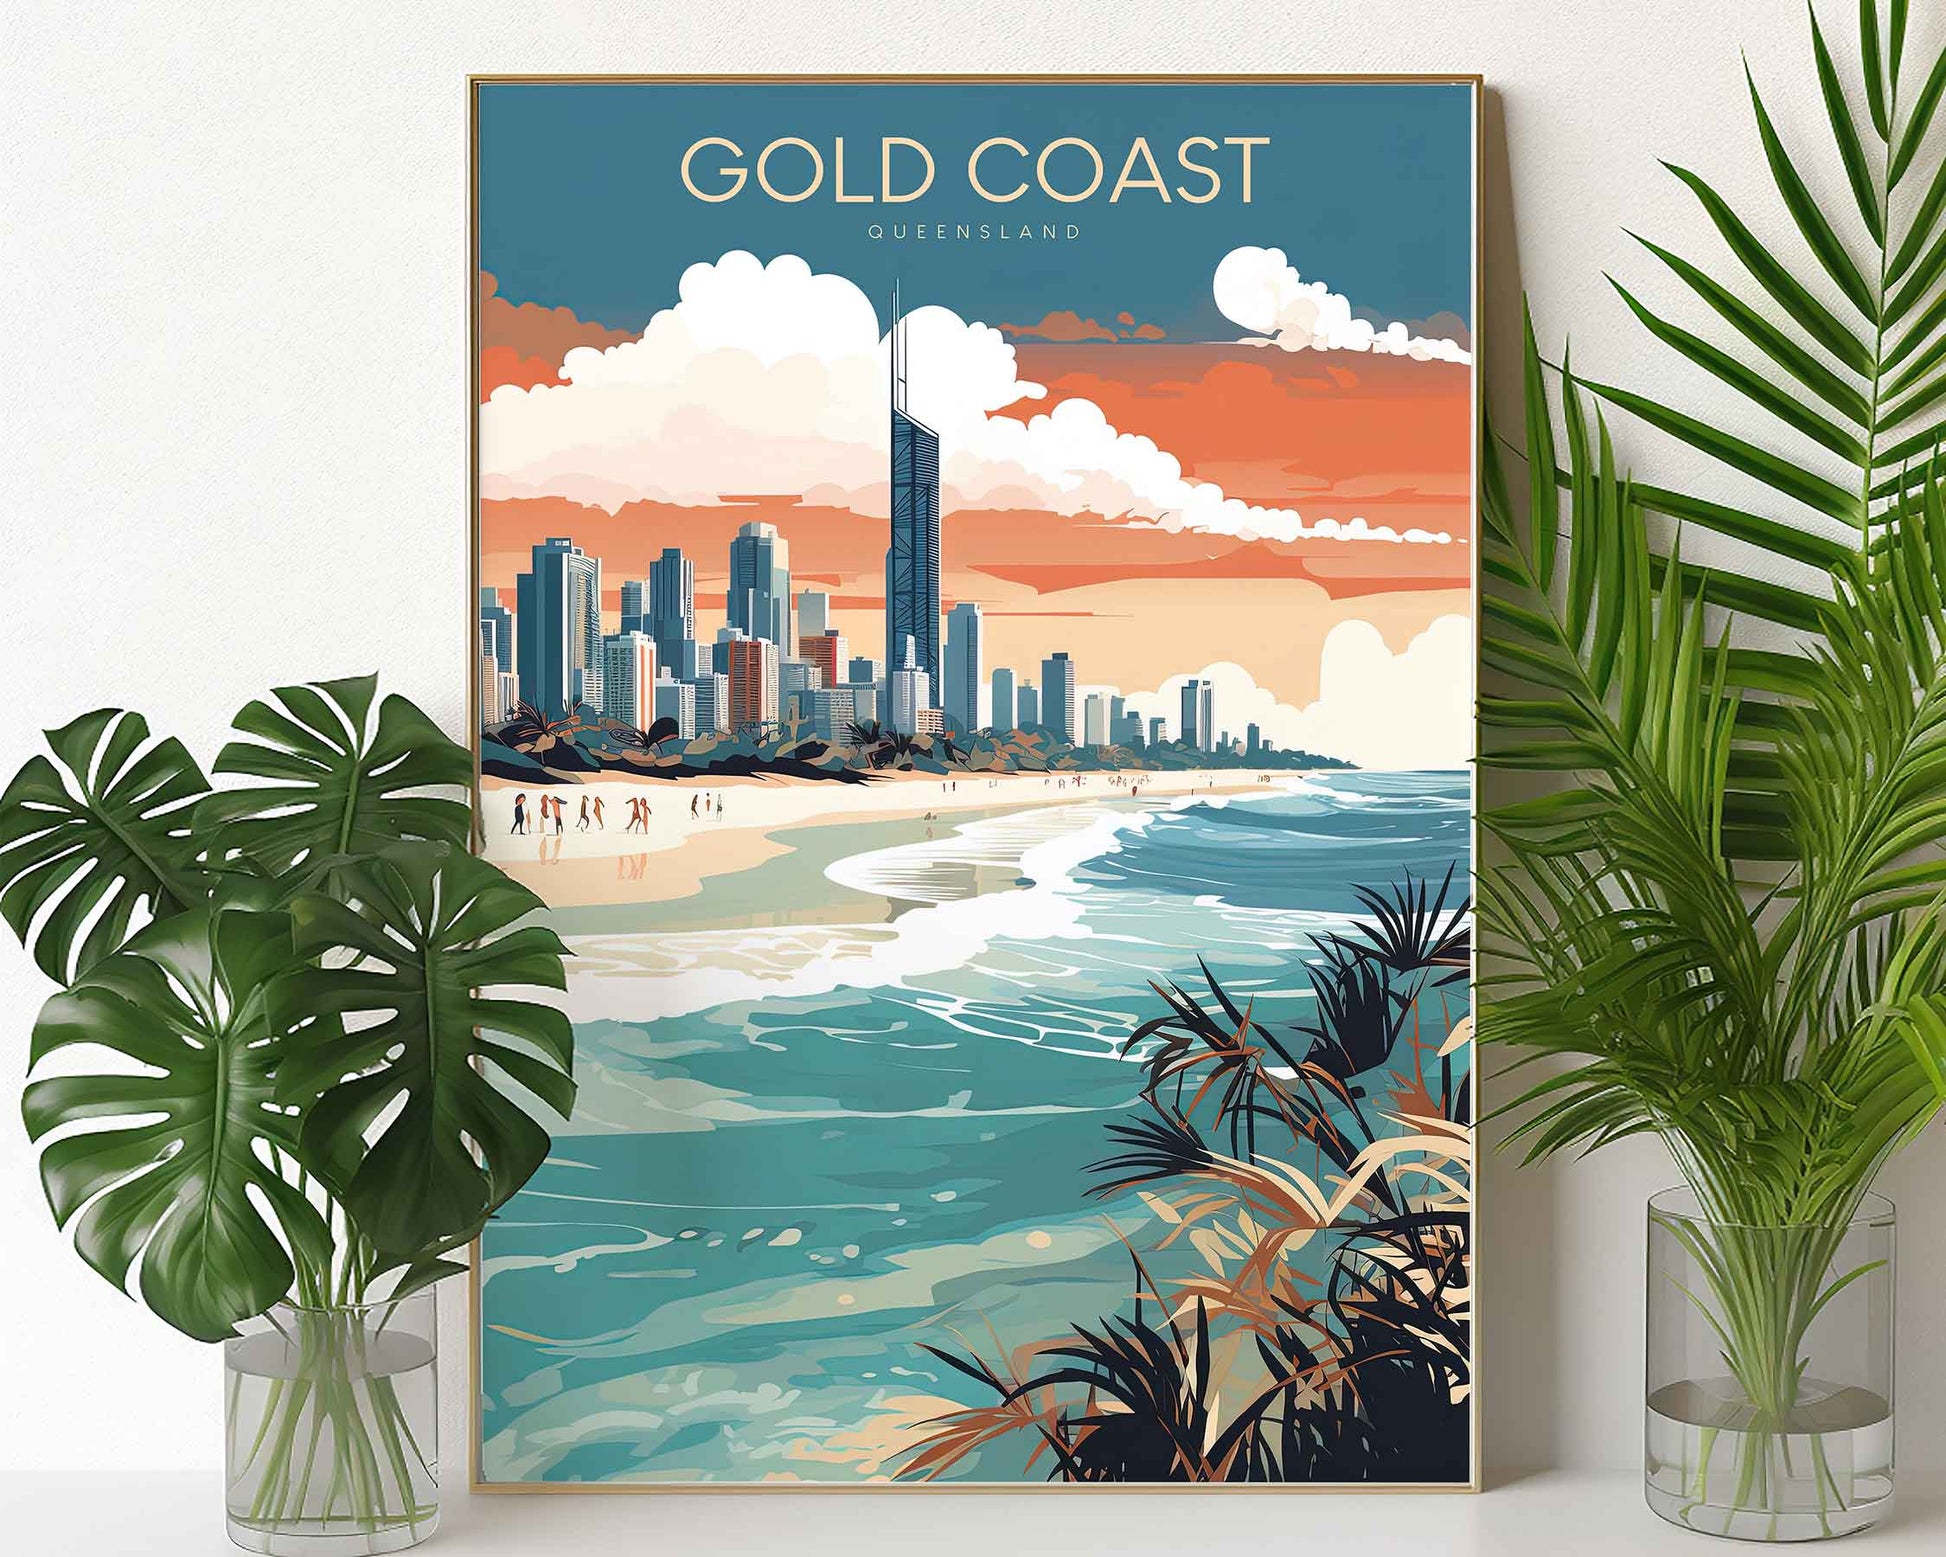 Framed Image of Gold Coast Australia Travel Poster Illustration Prints Wall Art